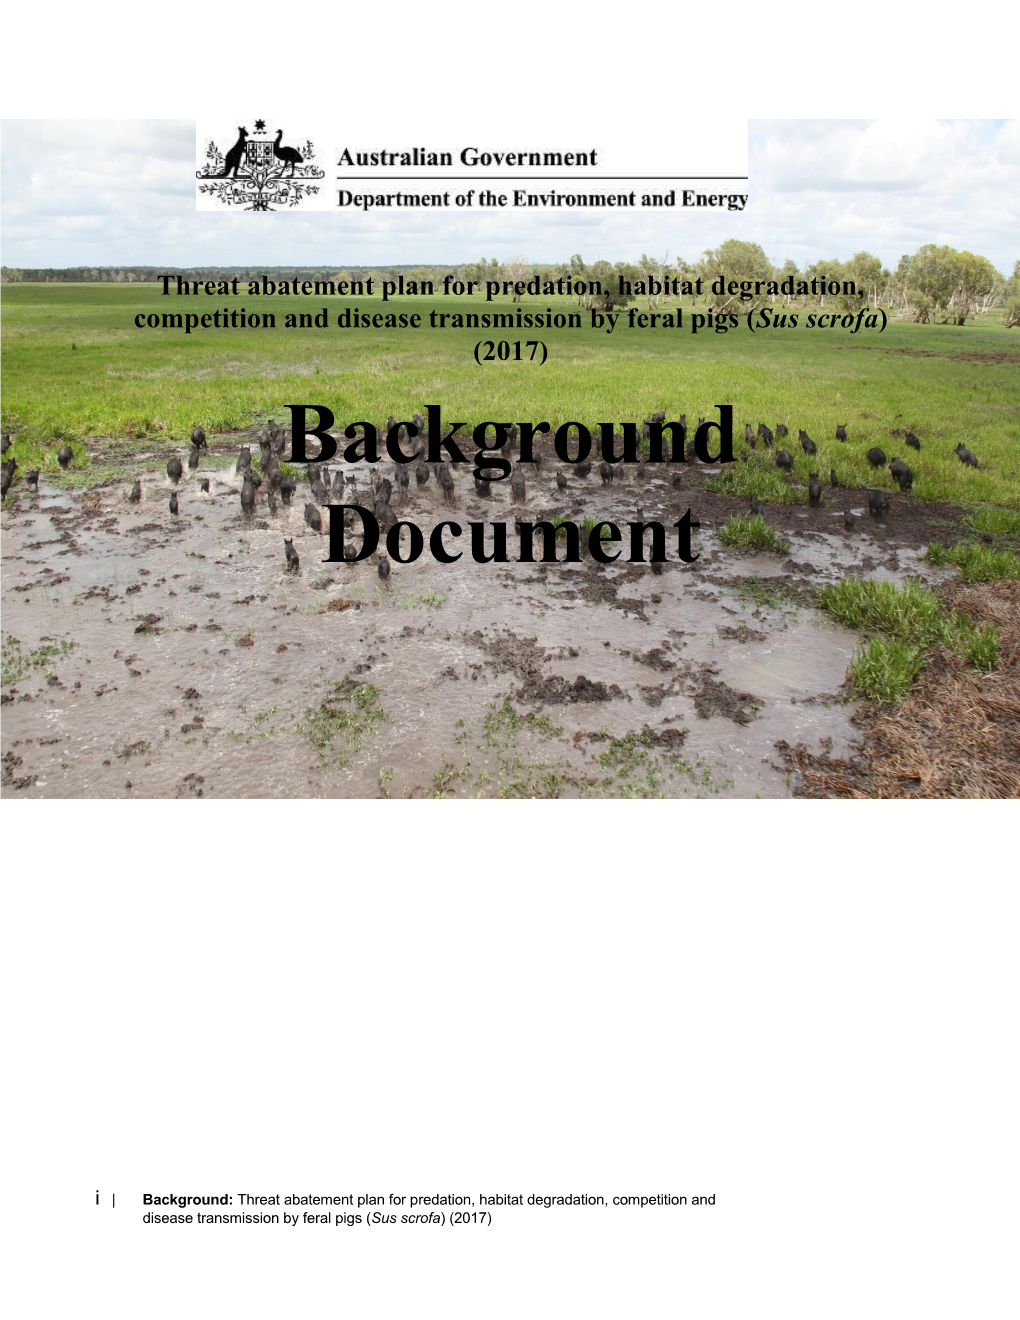 Background Document - Threat Abatement Plan for Predation, Habitat Degradation,Competition